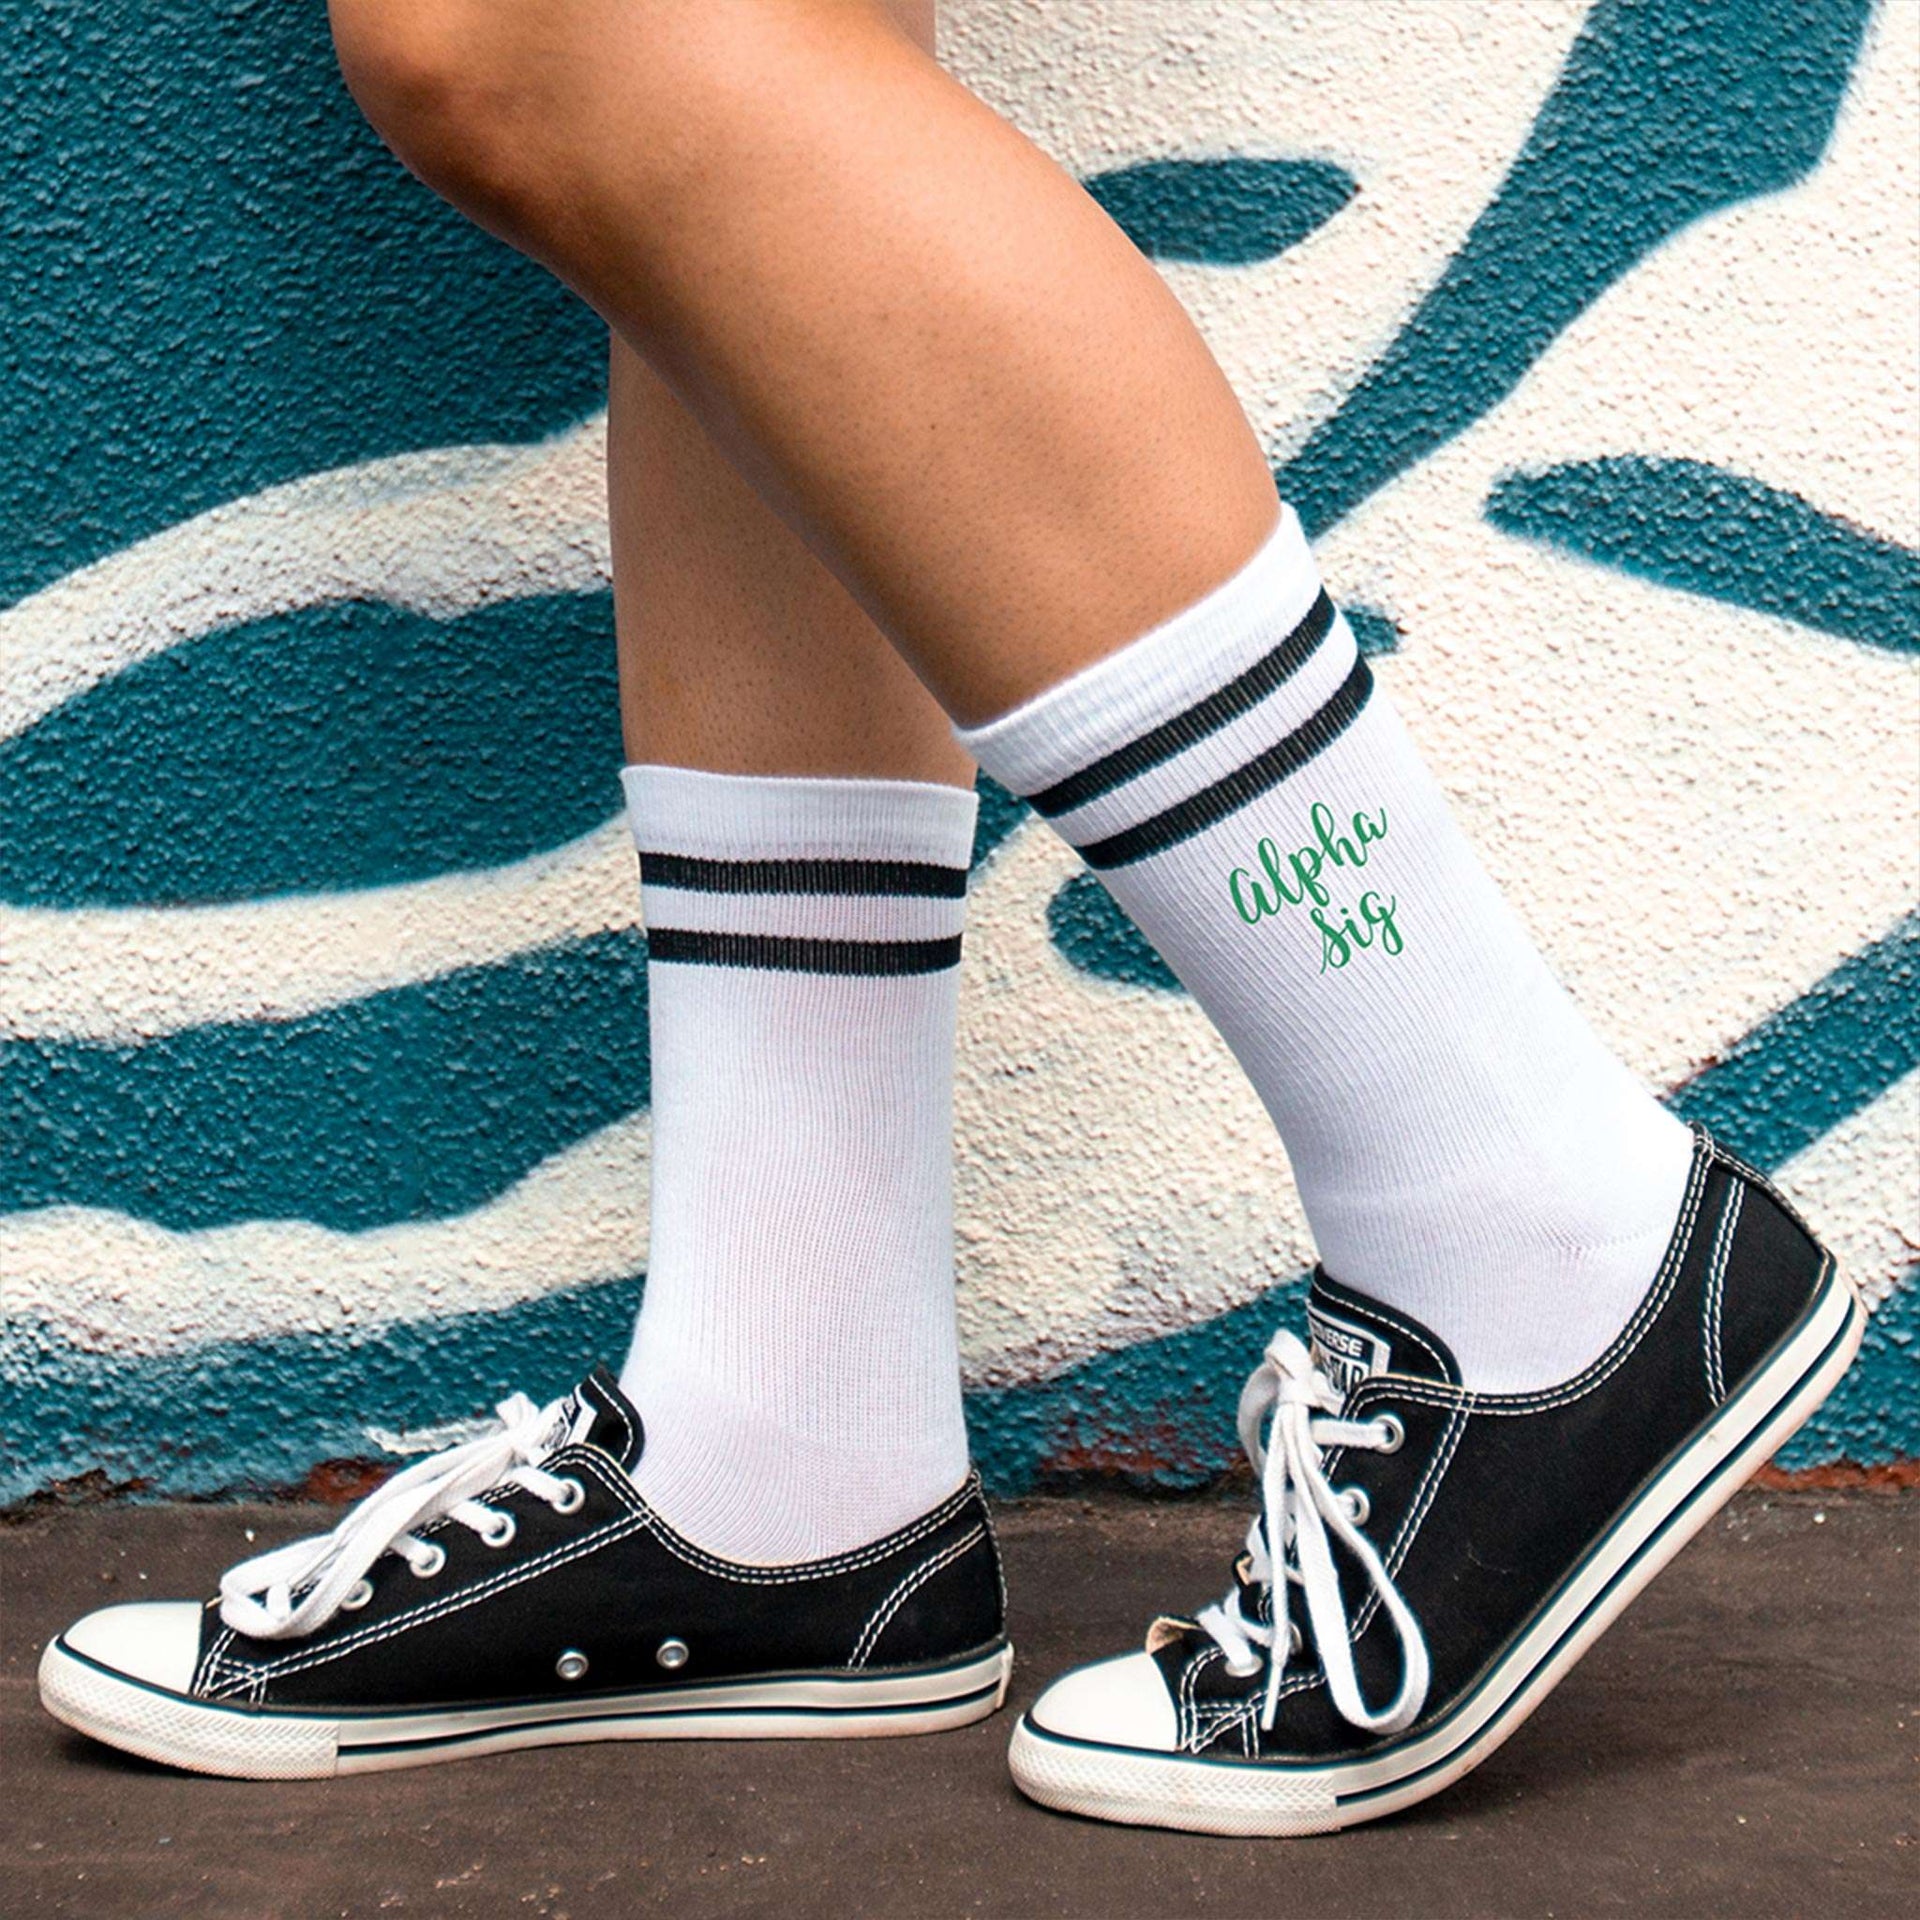 Alpha Sig sorority nickname custom printed on striped crew socks